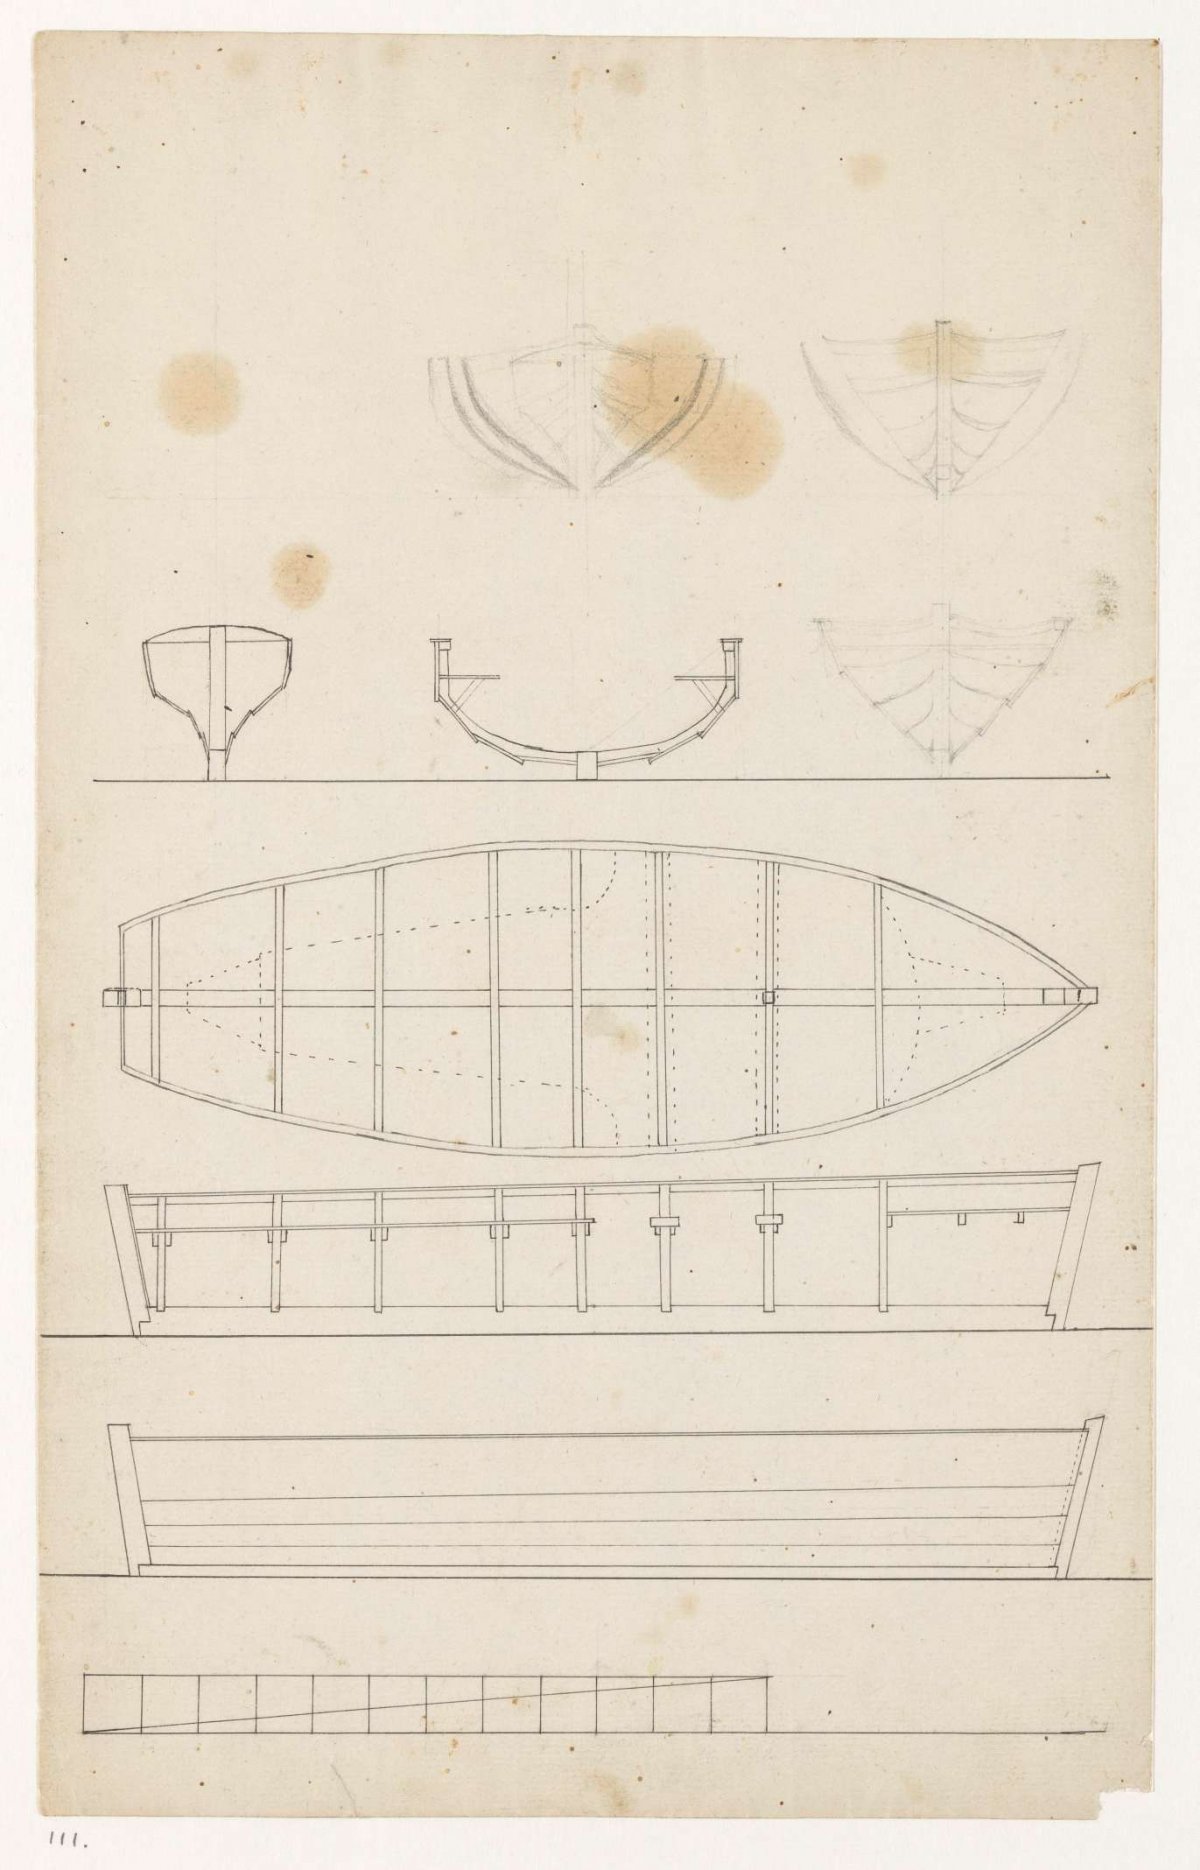 Construction drawing of a vlet, Jan Brandes, 1787 - 1808